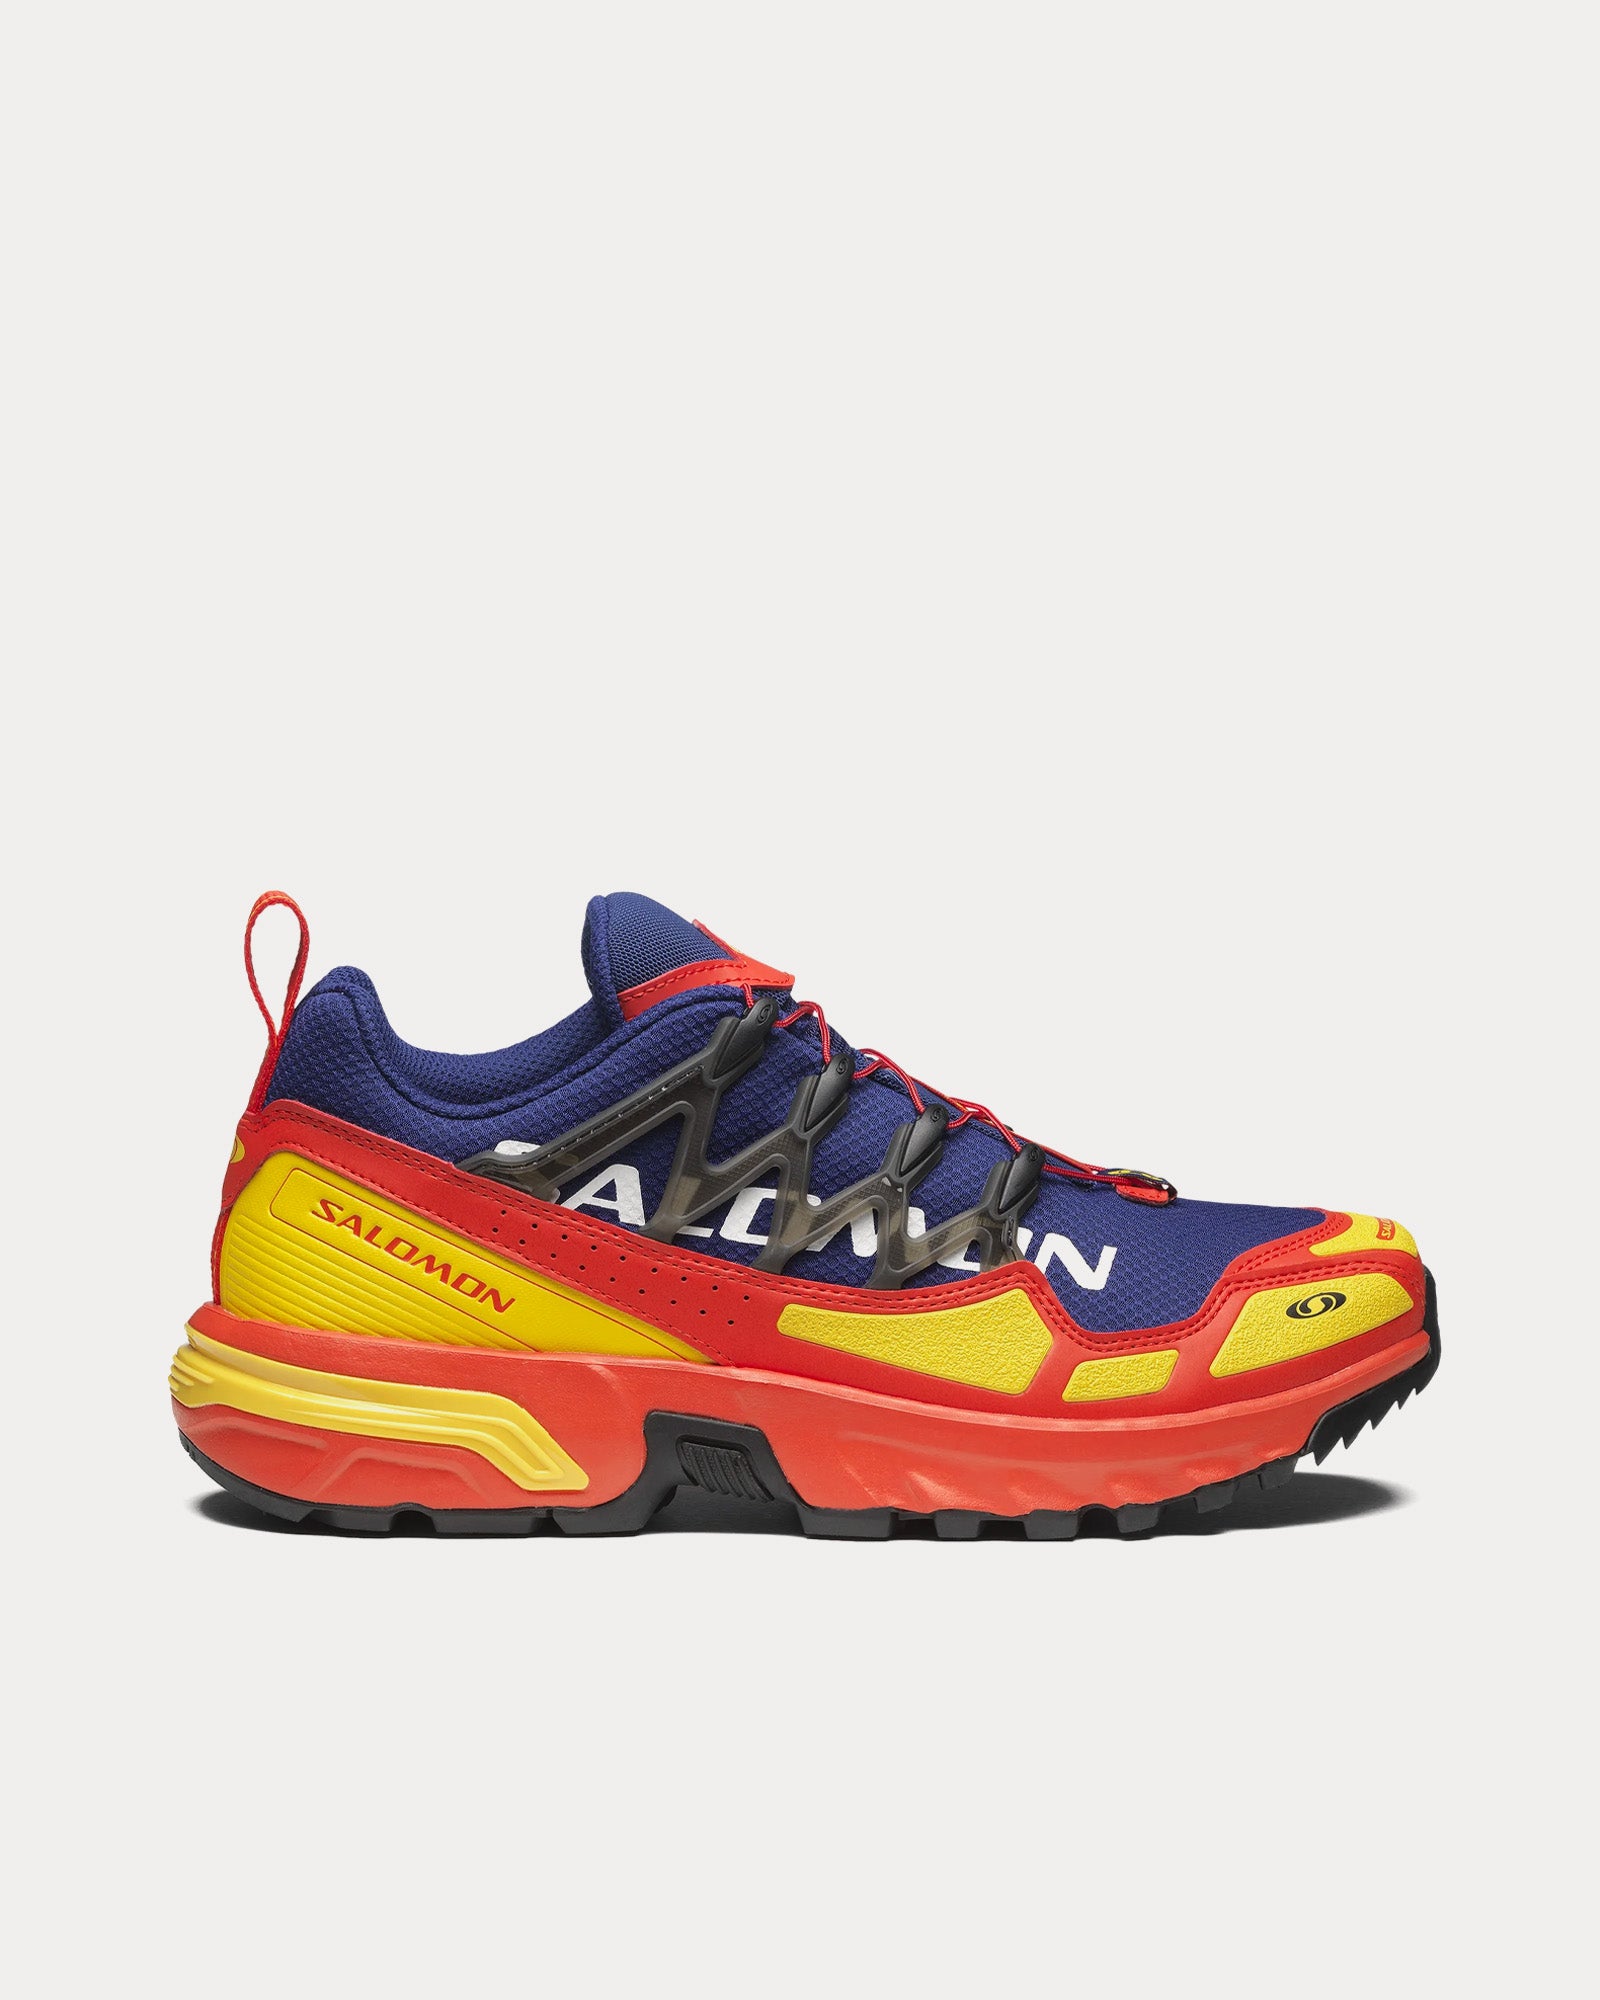 Salomon - ACS + Heritage Pack Cherry Tomato / Blue Print / Lemon Low Top Sneakers